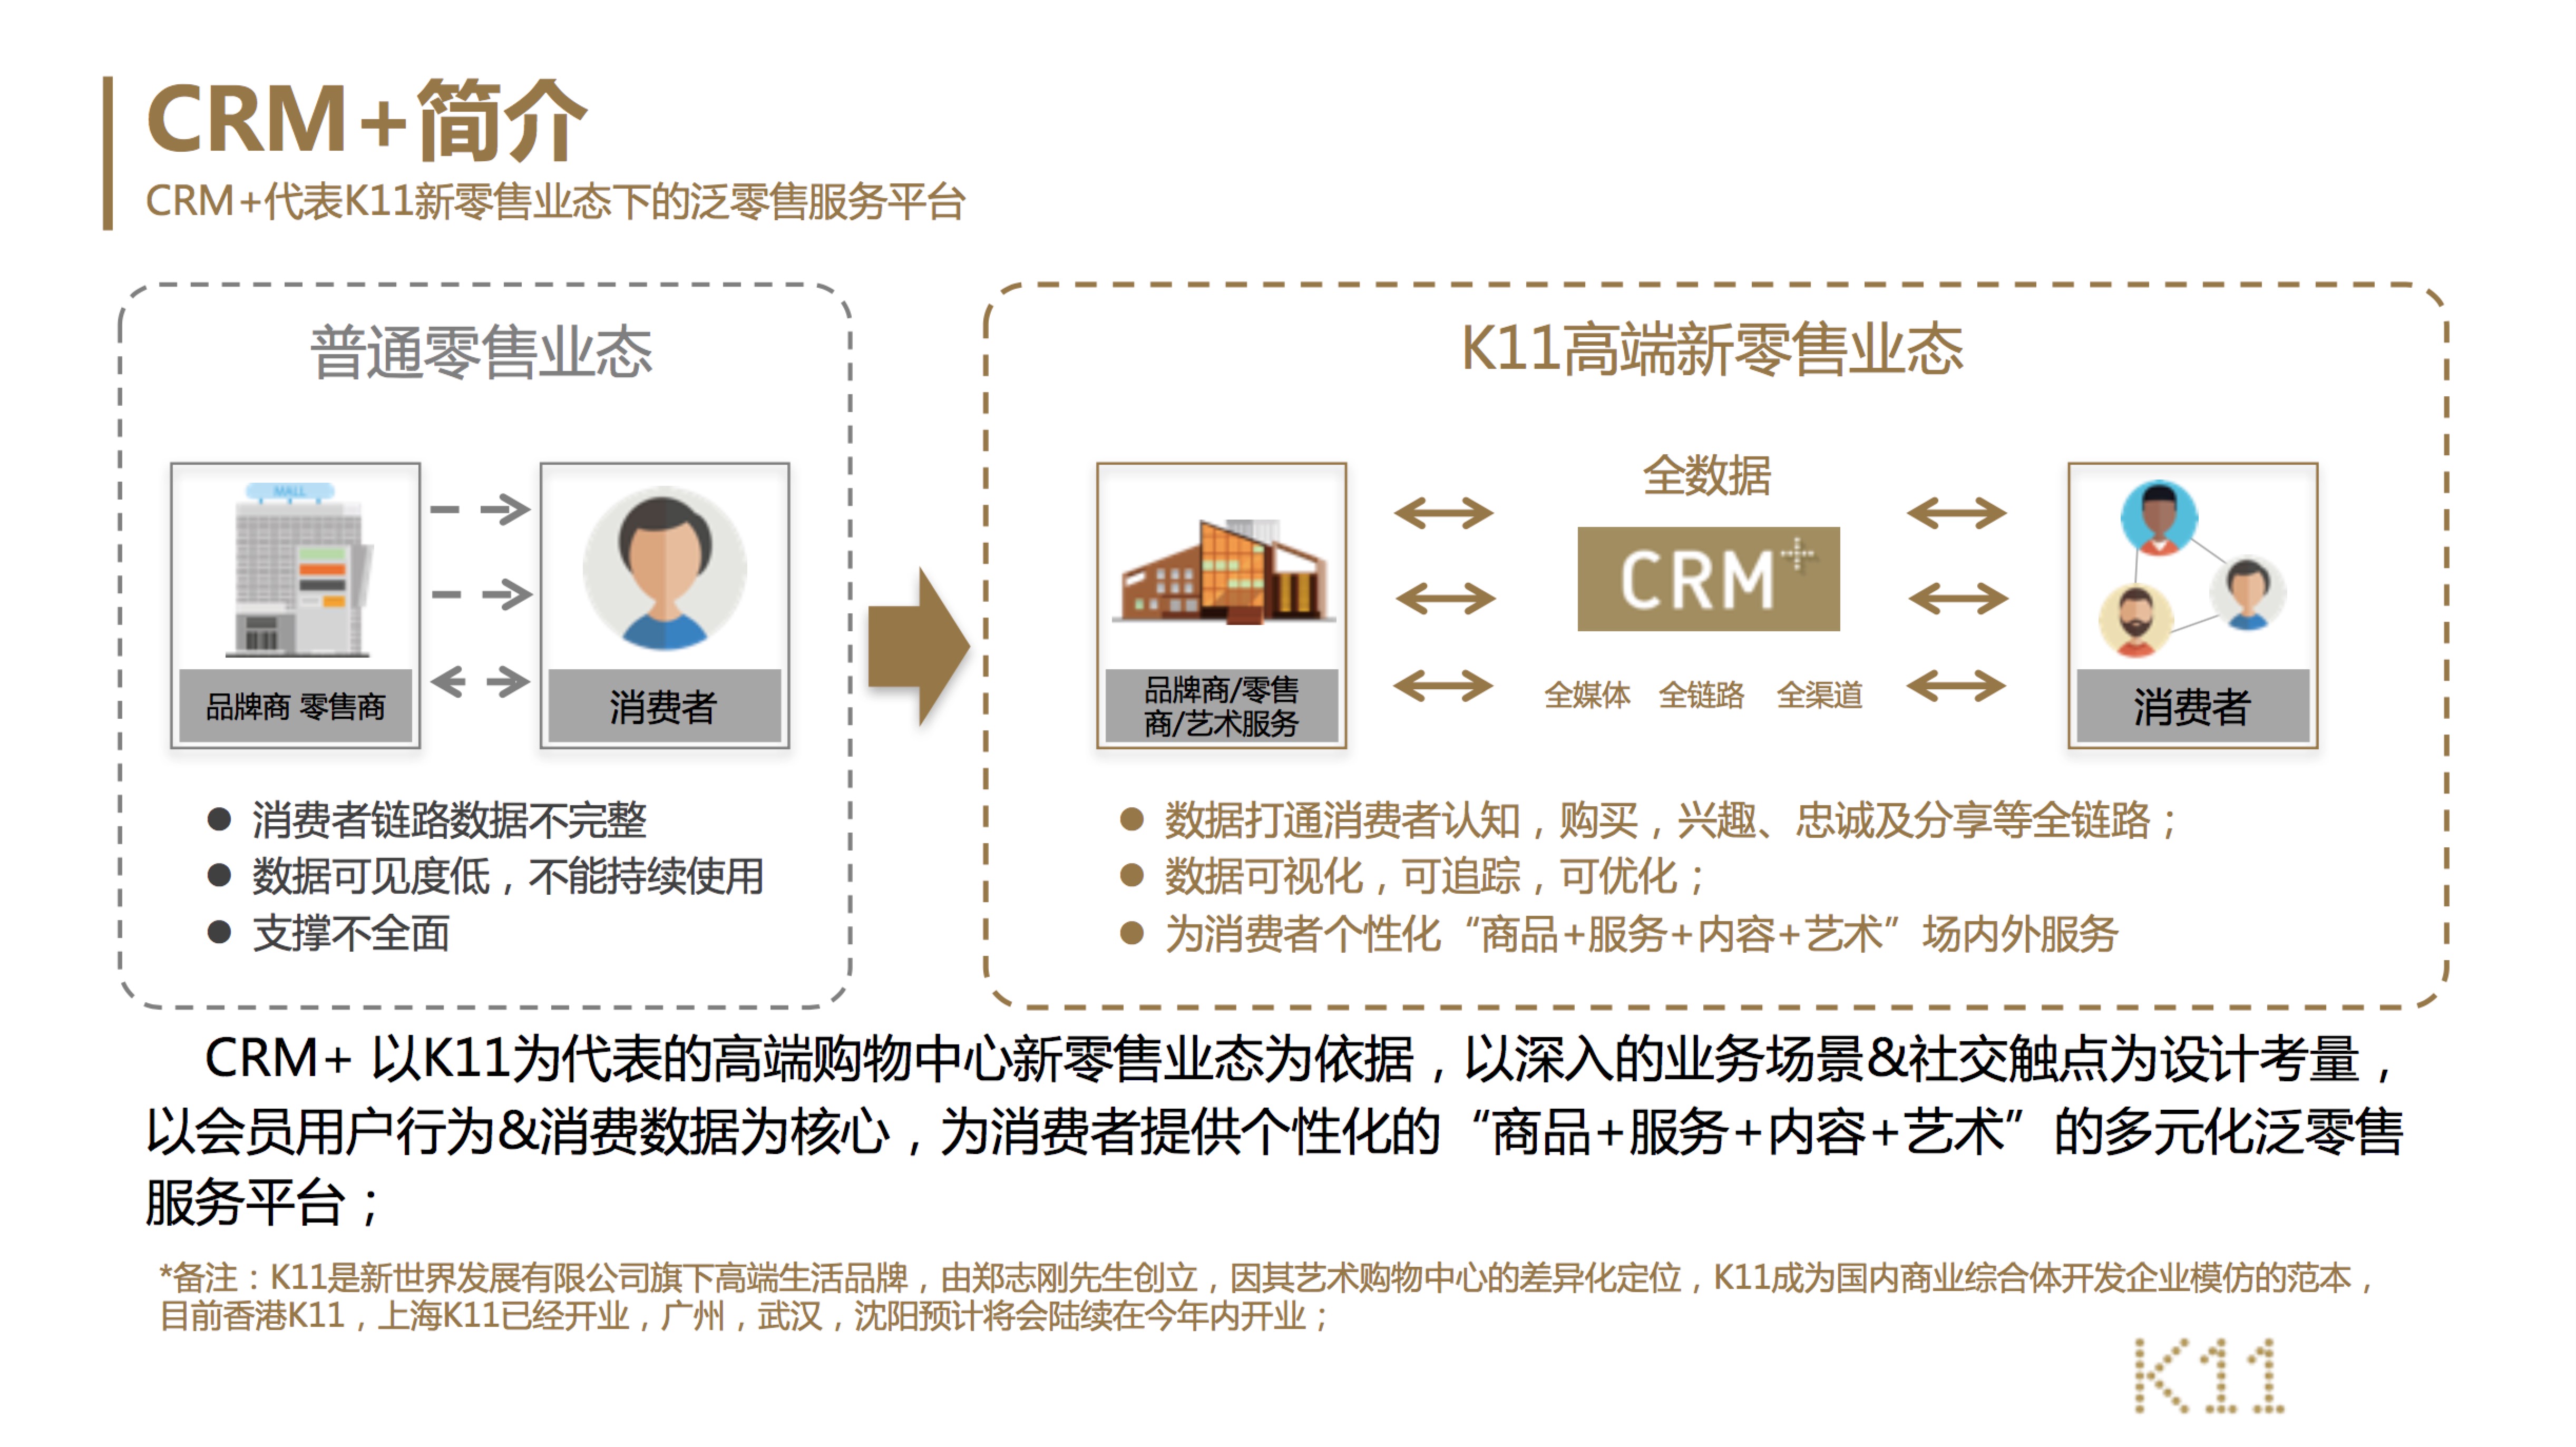 K11 CRM+ system